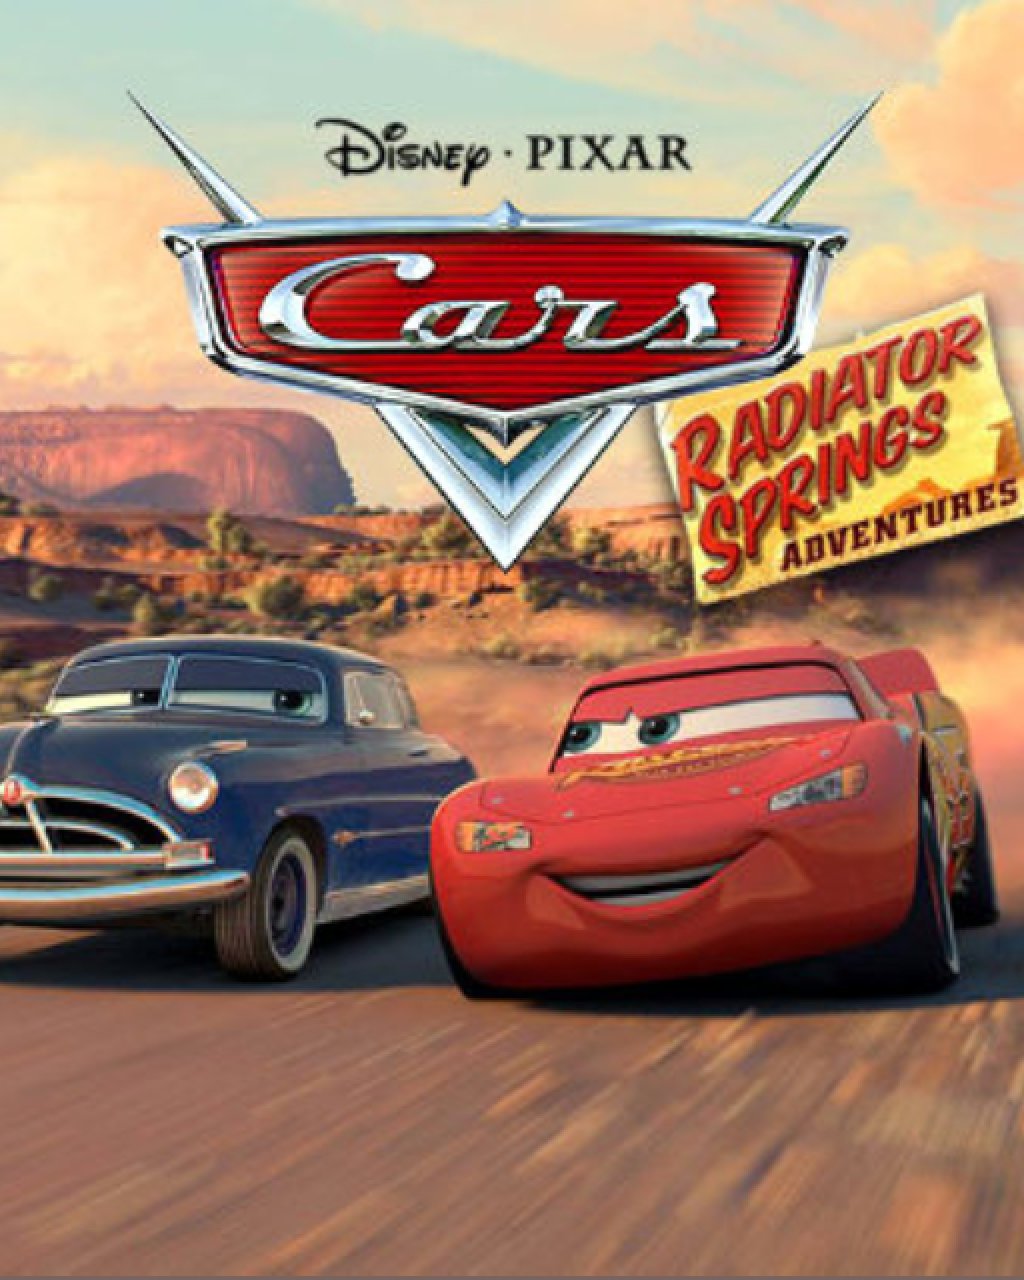 ESD Disney Pixar Cars Radiator Springs Adventures